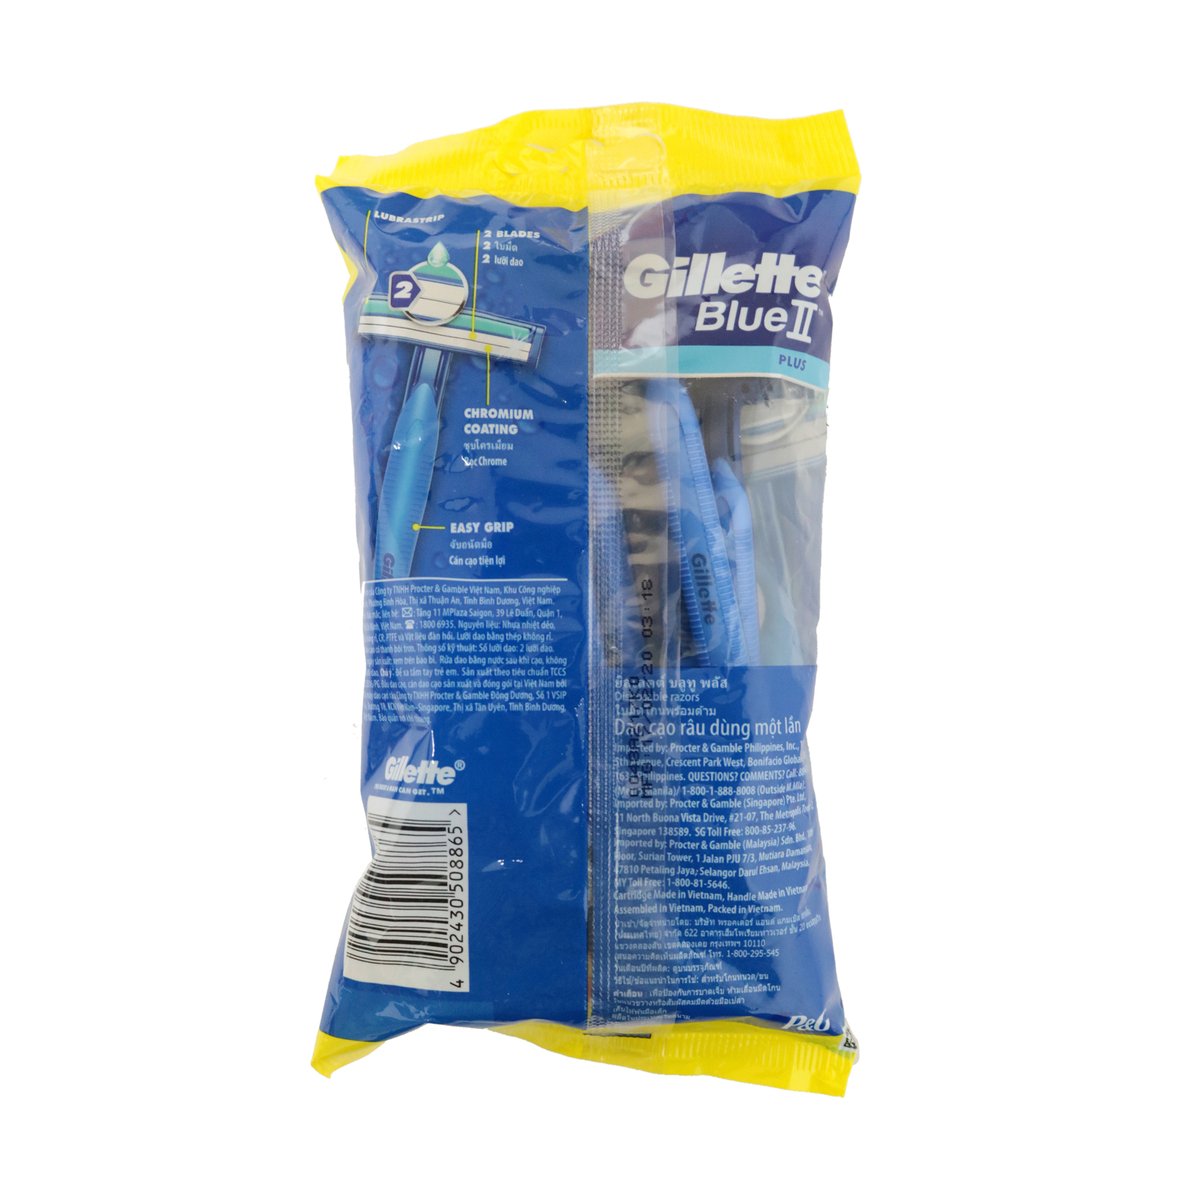 Gillette Blue II Plus Ultra Sensitive Razors 10pcs